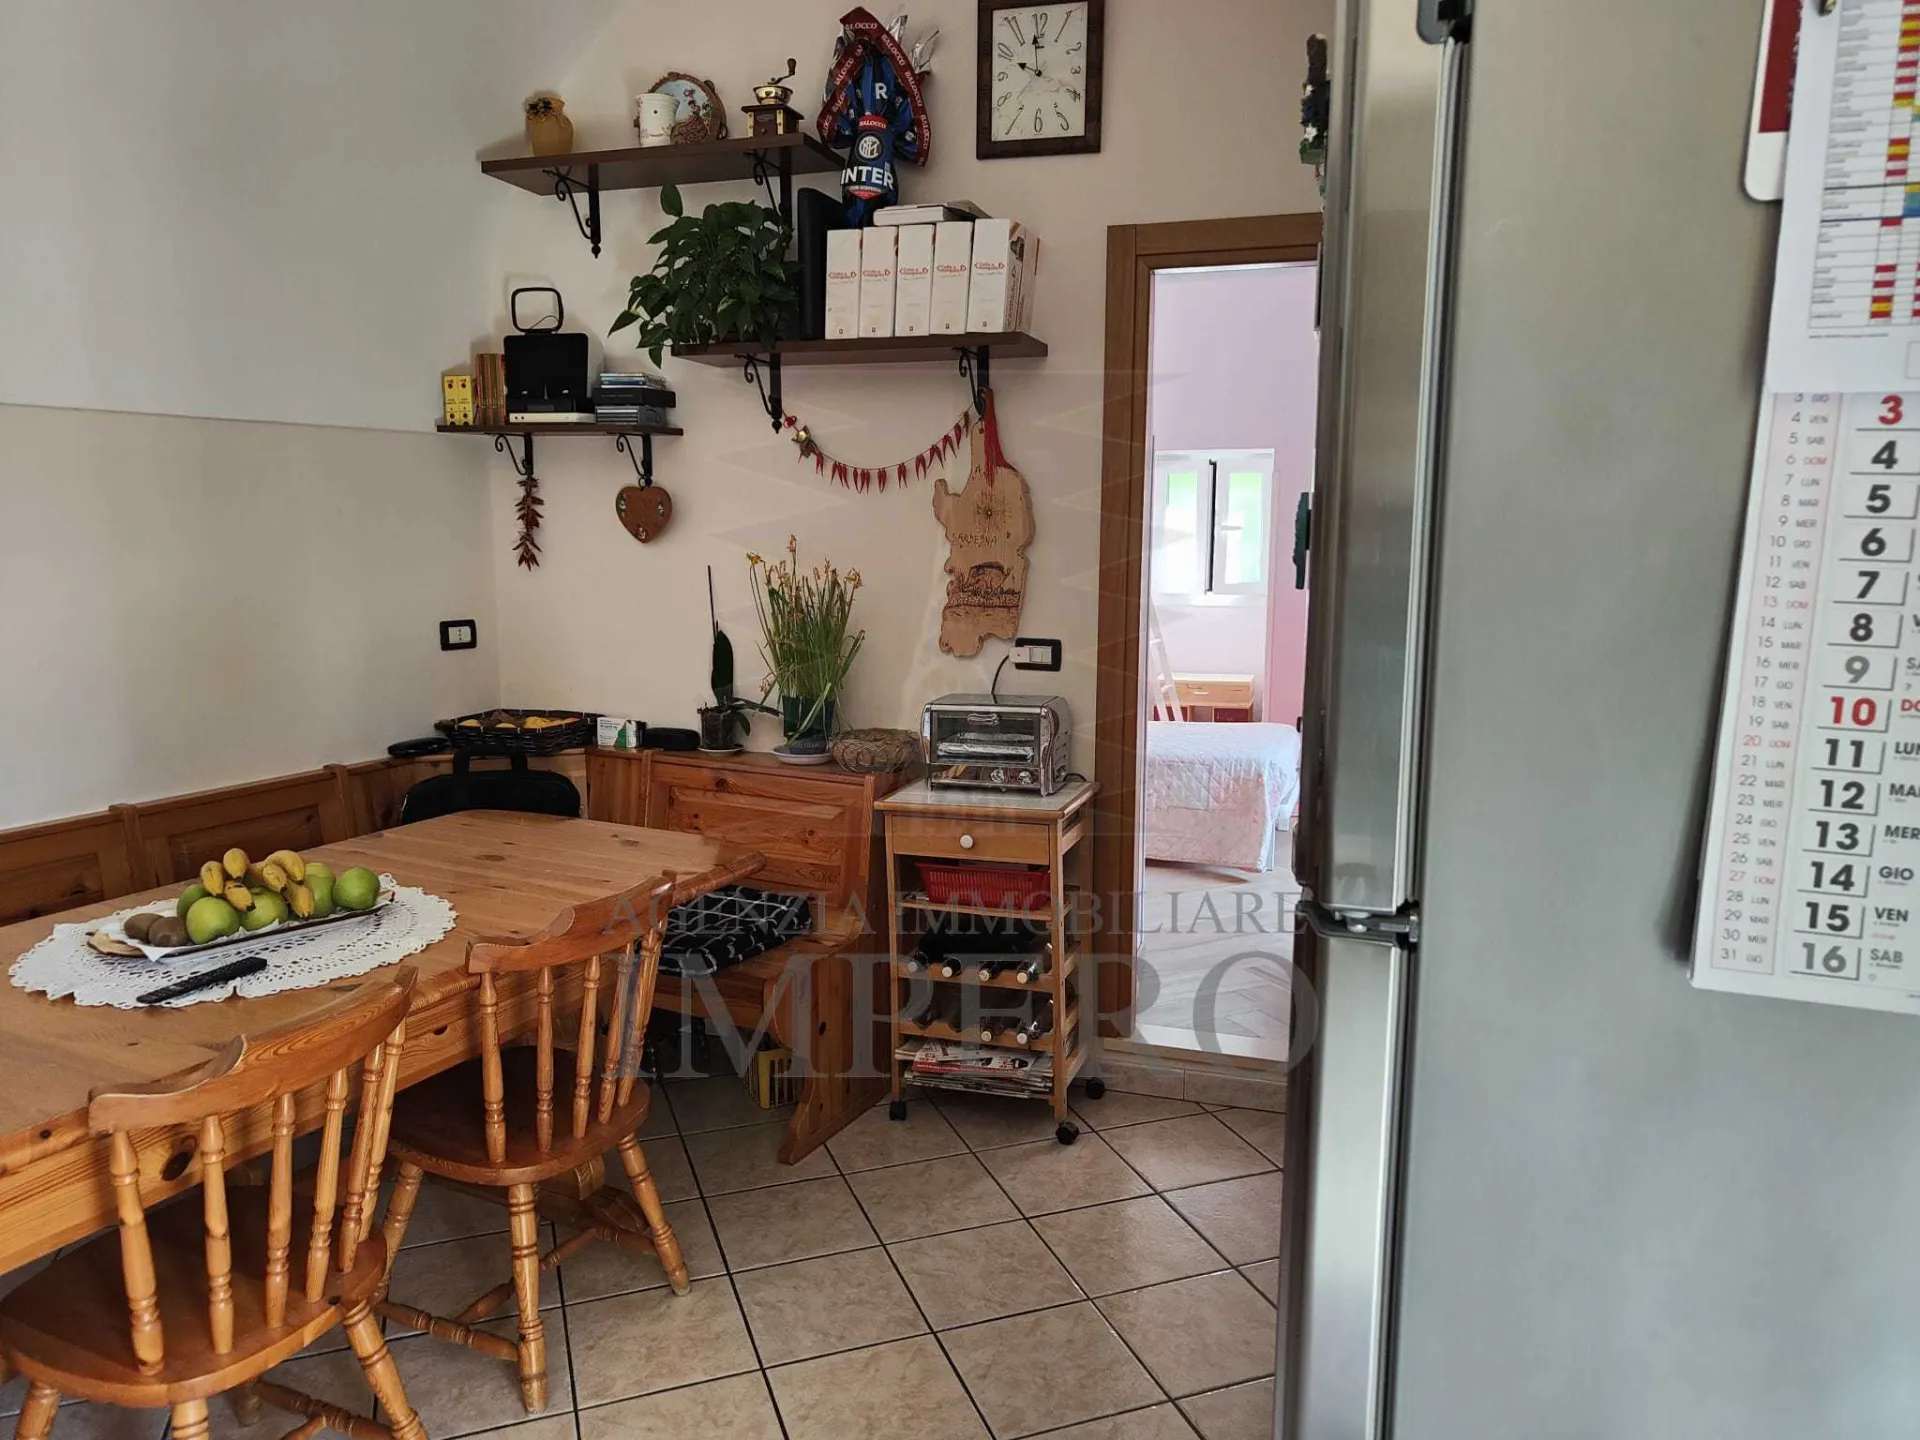 Immagine per Porzione di casa in vendita a Ventimiglia via Murinai 78